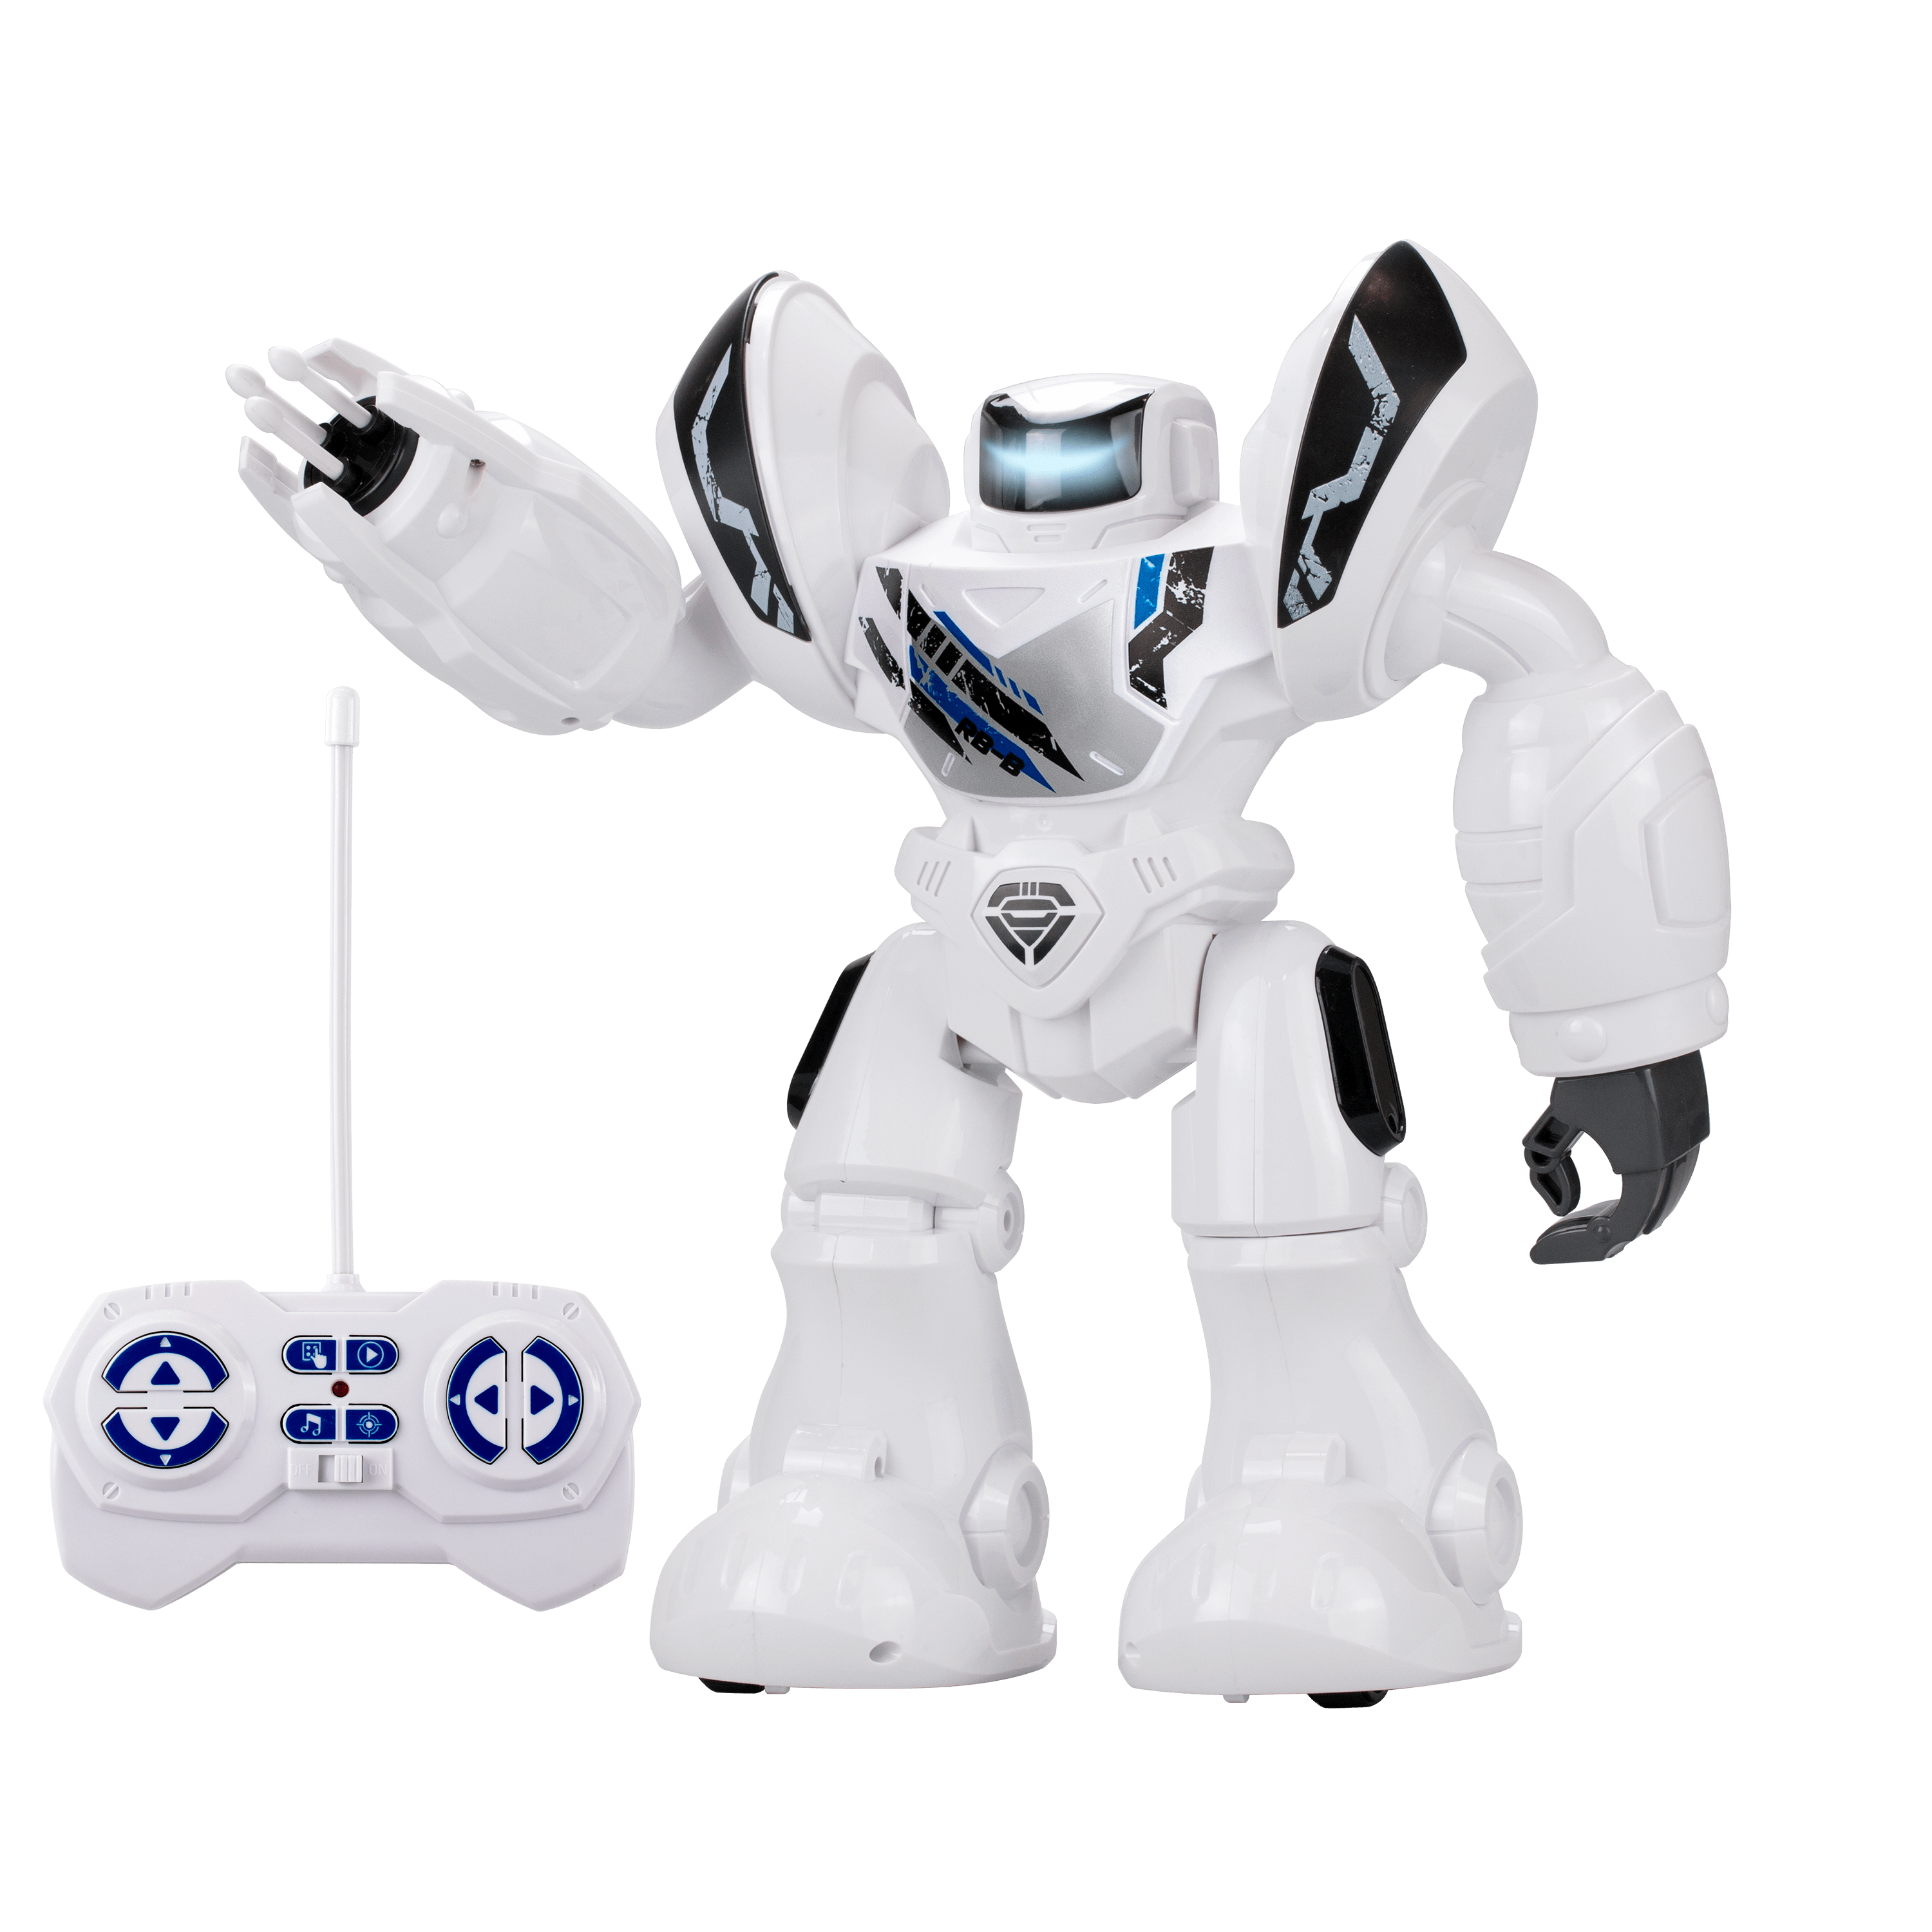 YCOO Neo OP One Programmable Robot OPEN BOX